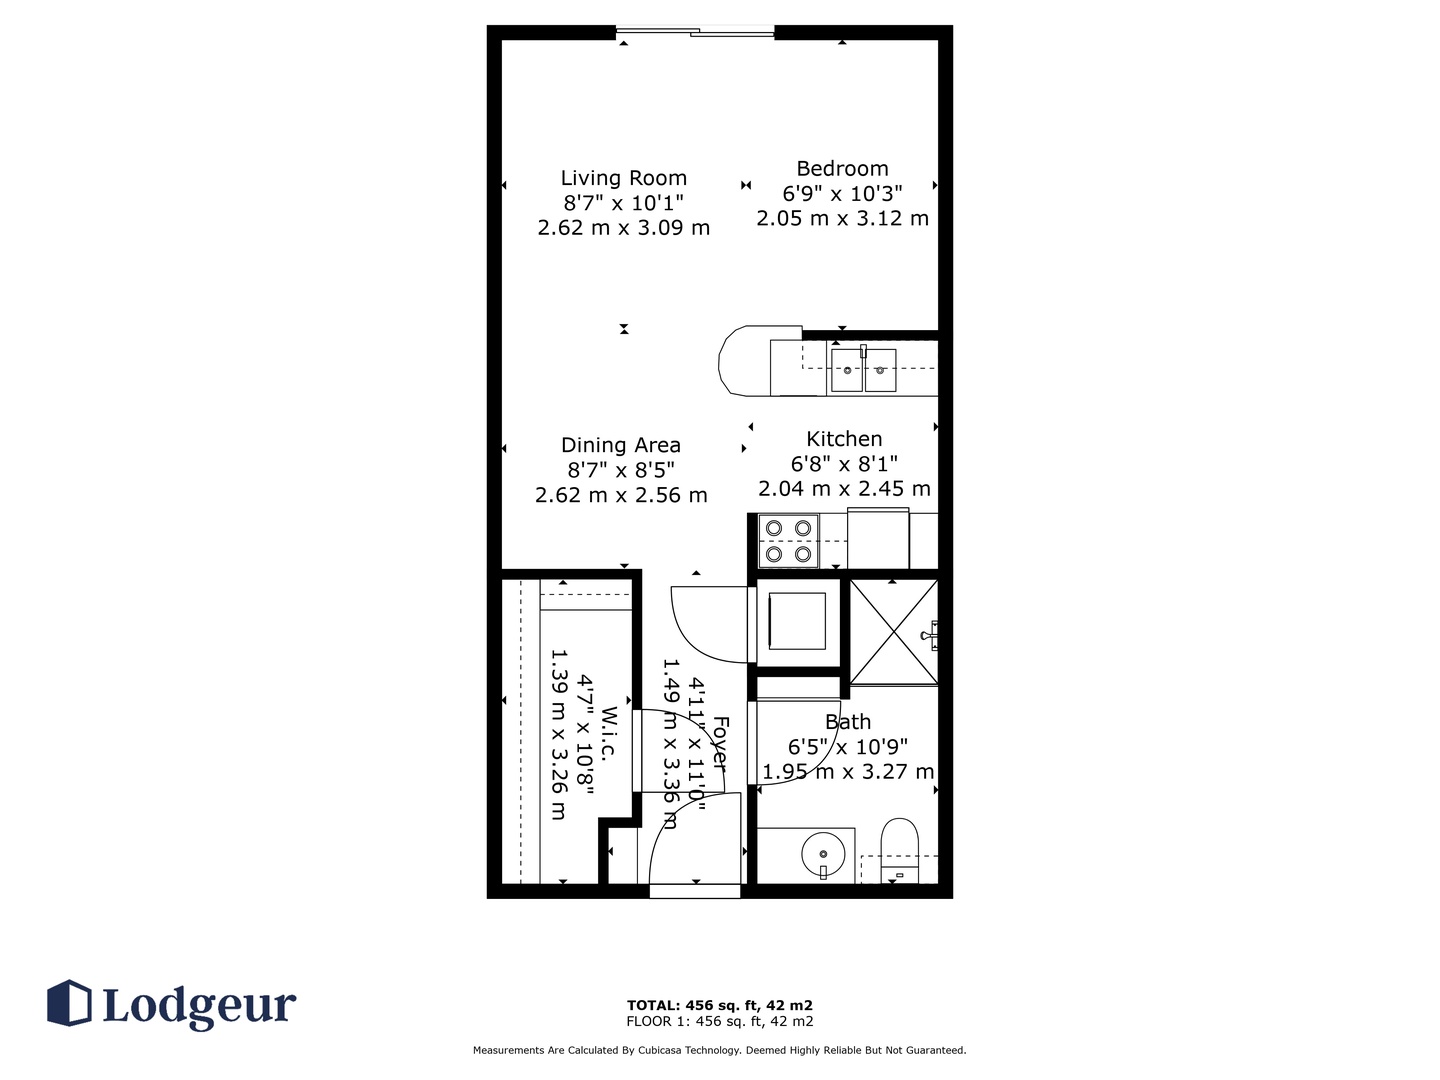 The apartment's floor plan